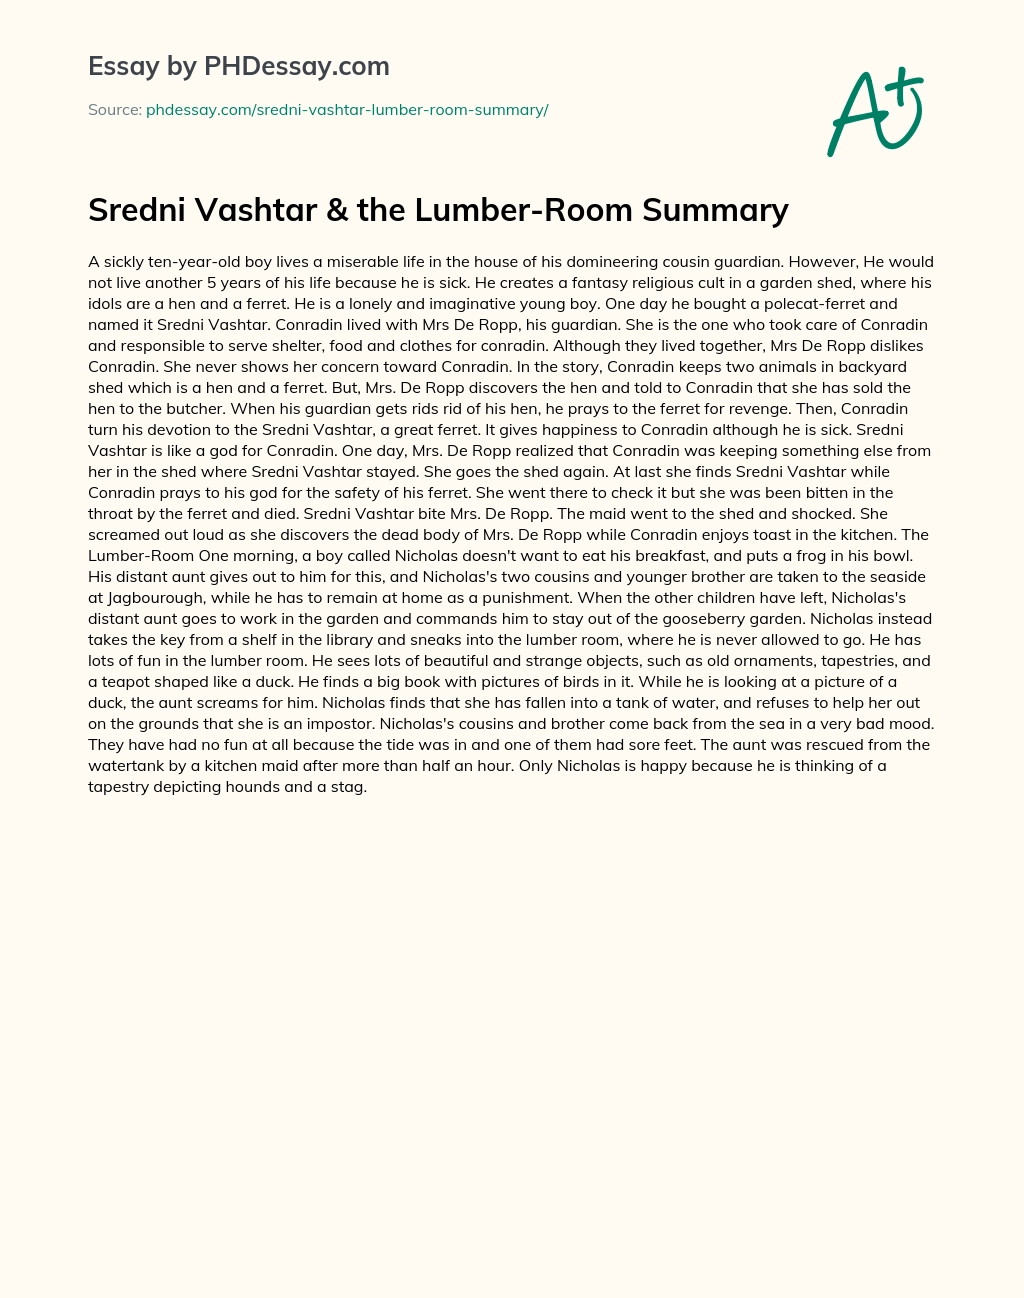 Sredni Vashtar & the Lumber-Room Summary essay